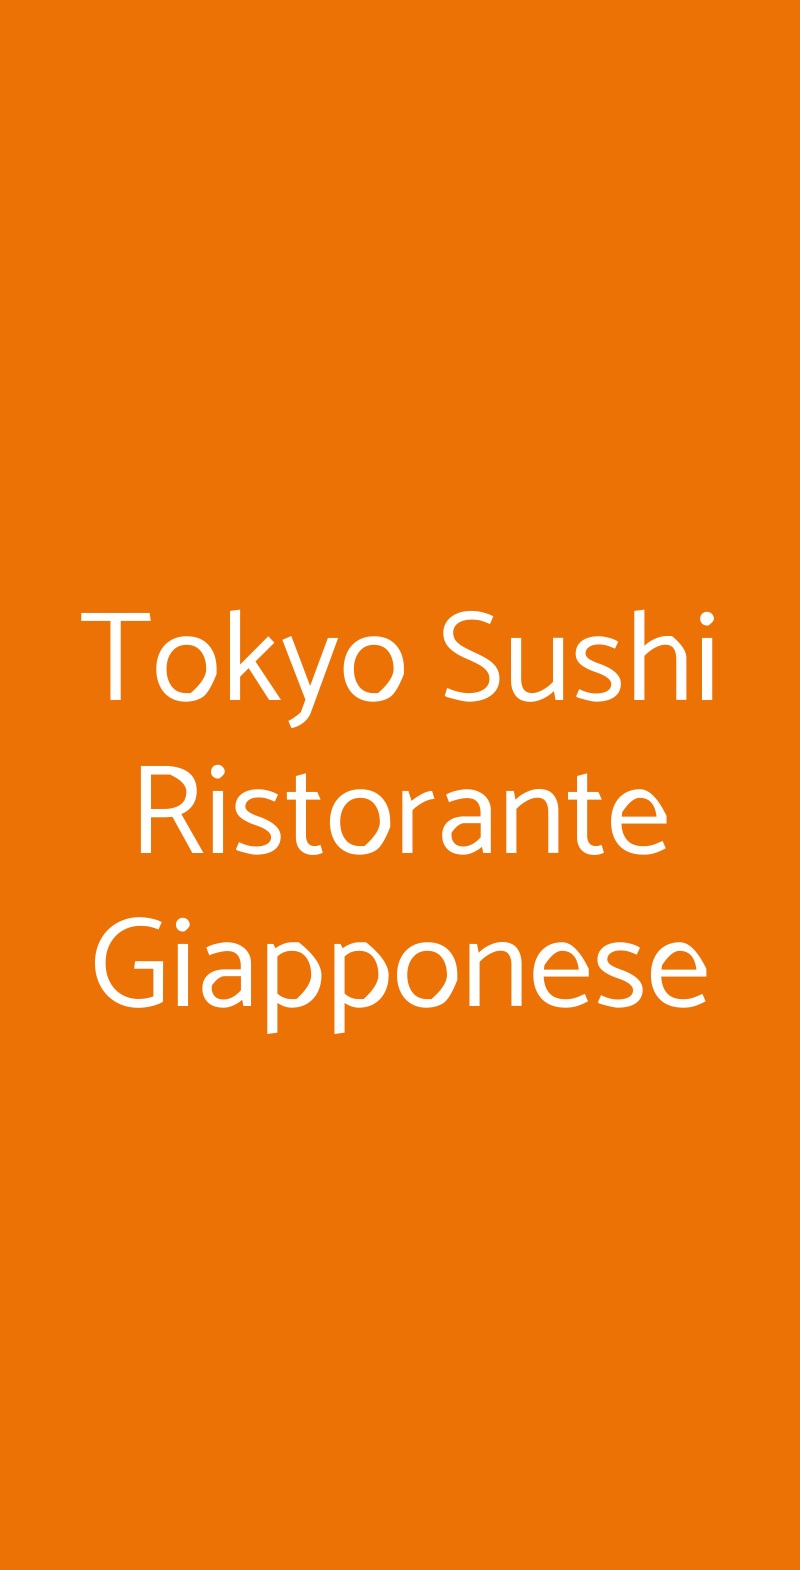 Tokyo Sushi Ristorante Giapponese Verona menù 1 pagina